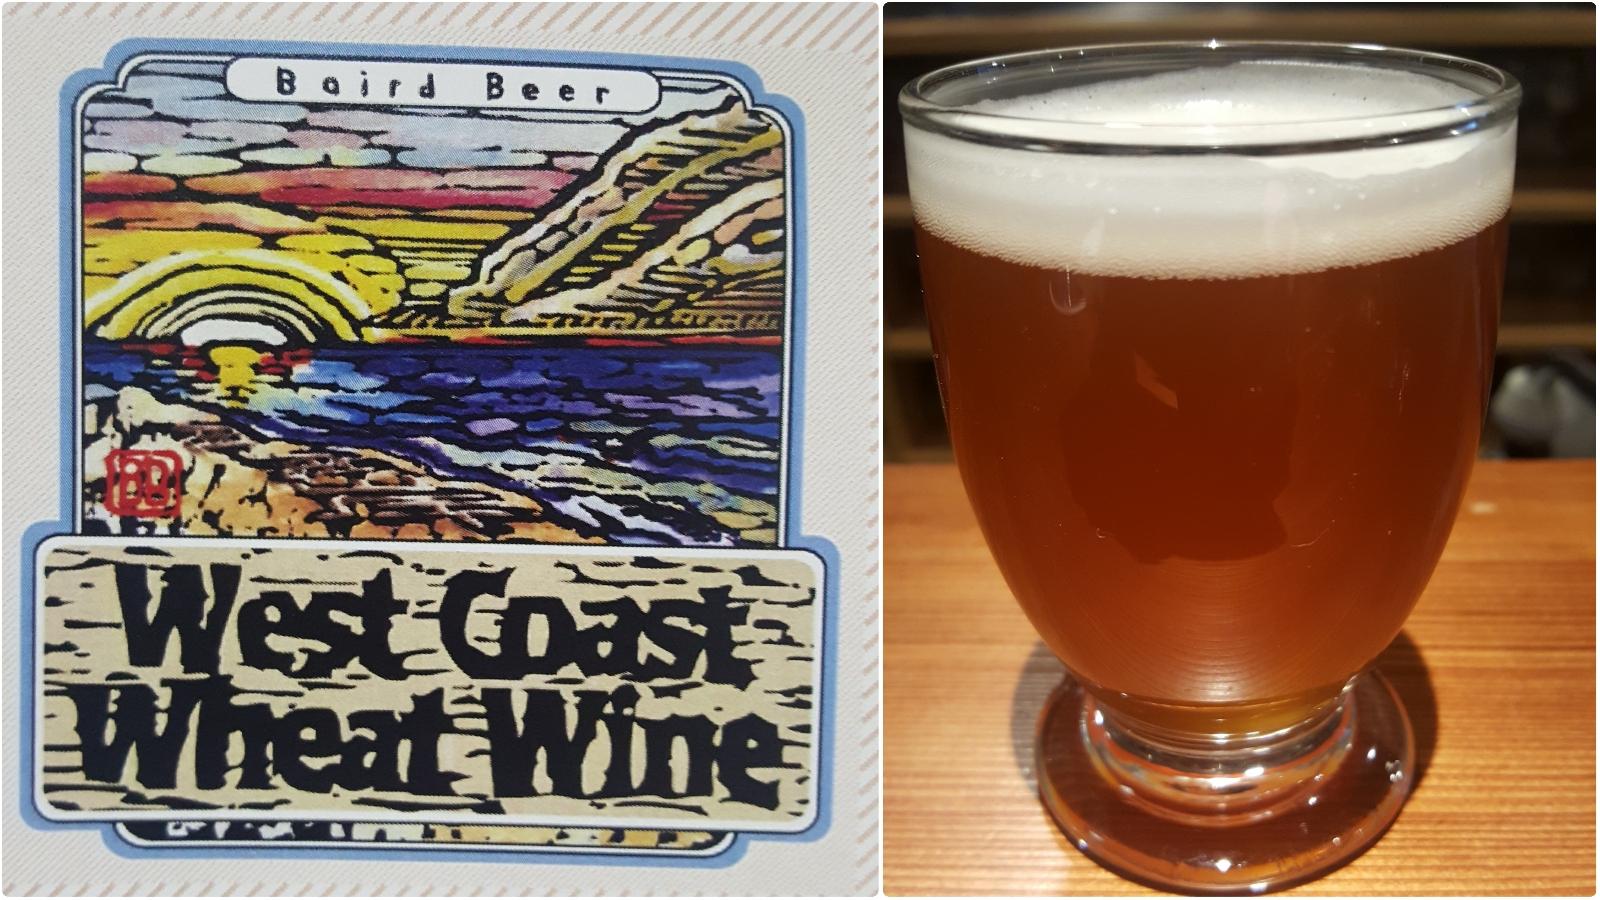 West Coast Wheat Wine